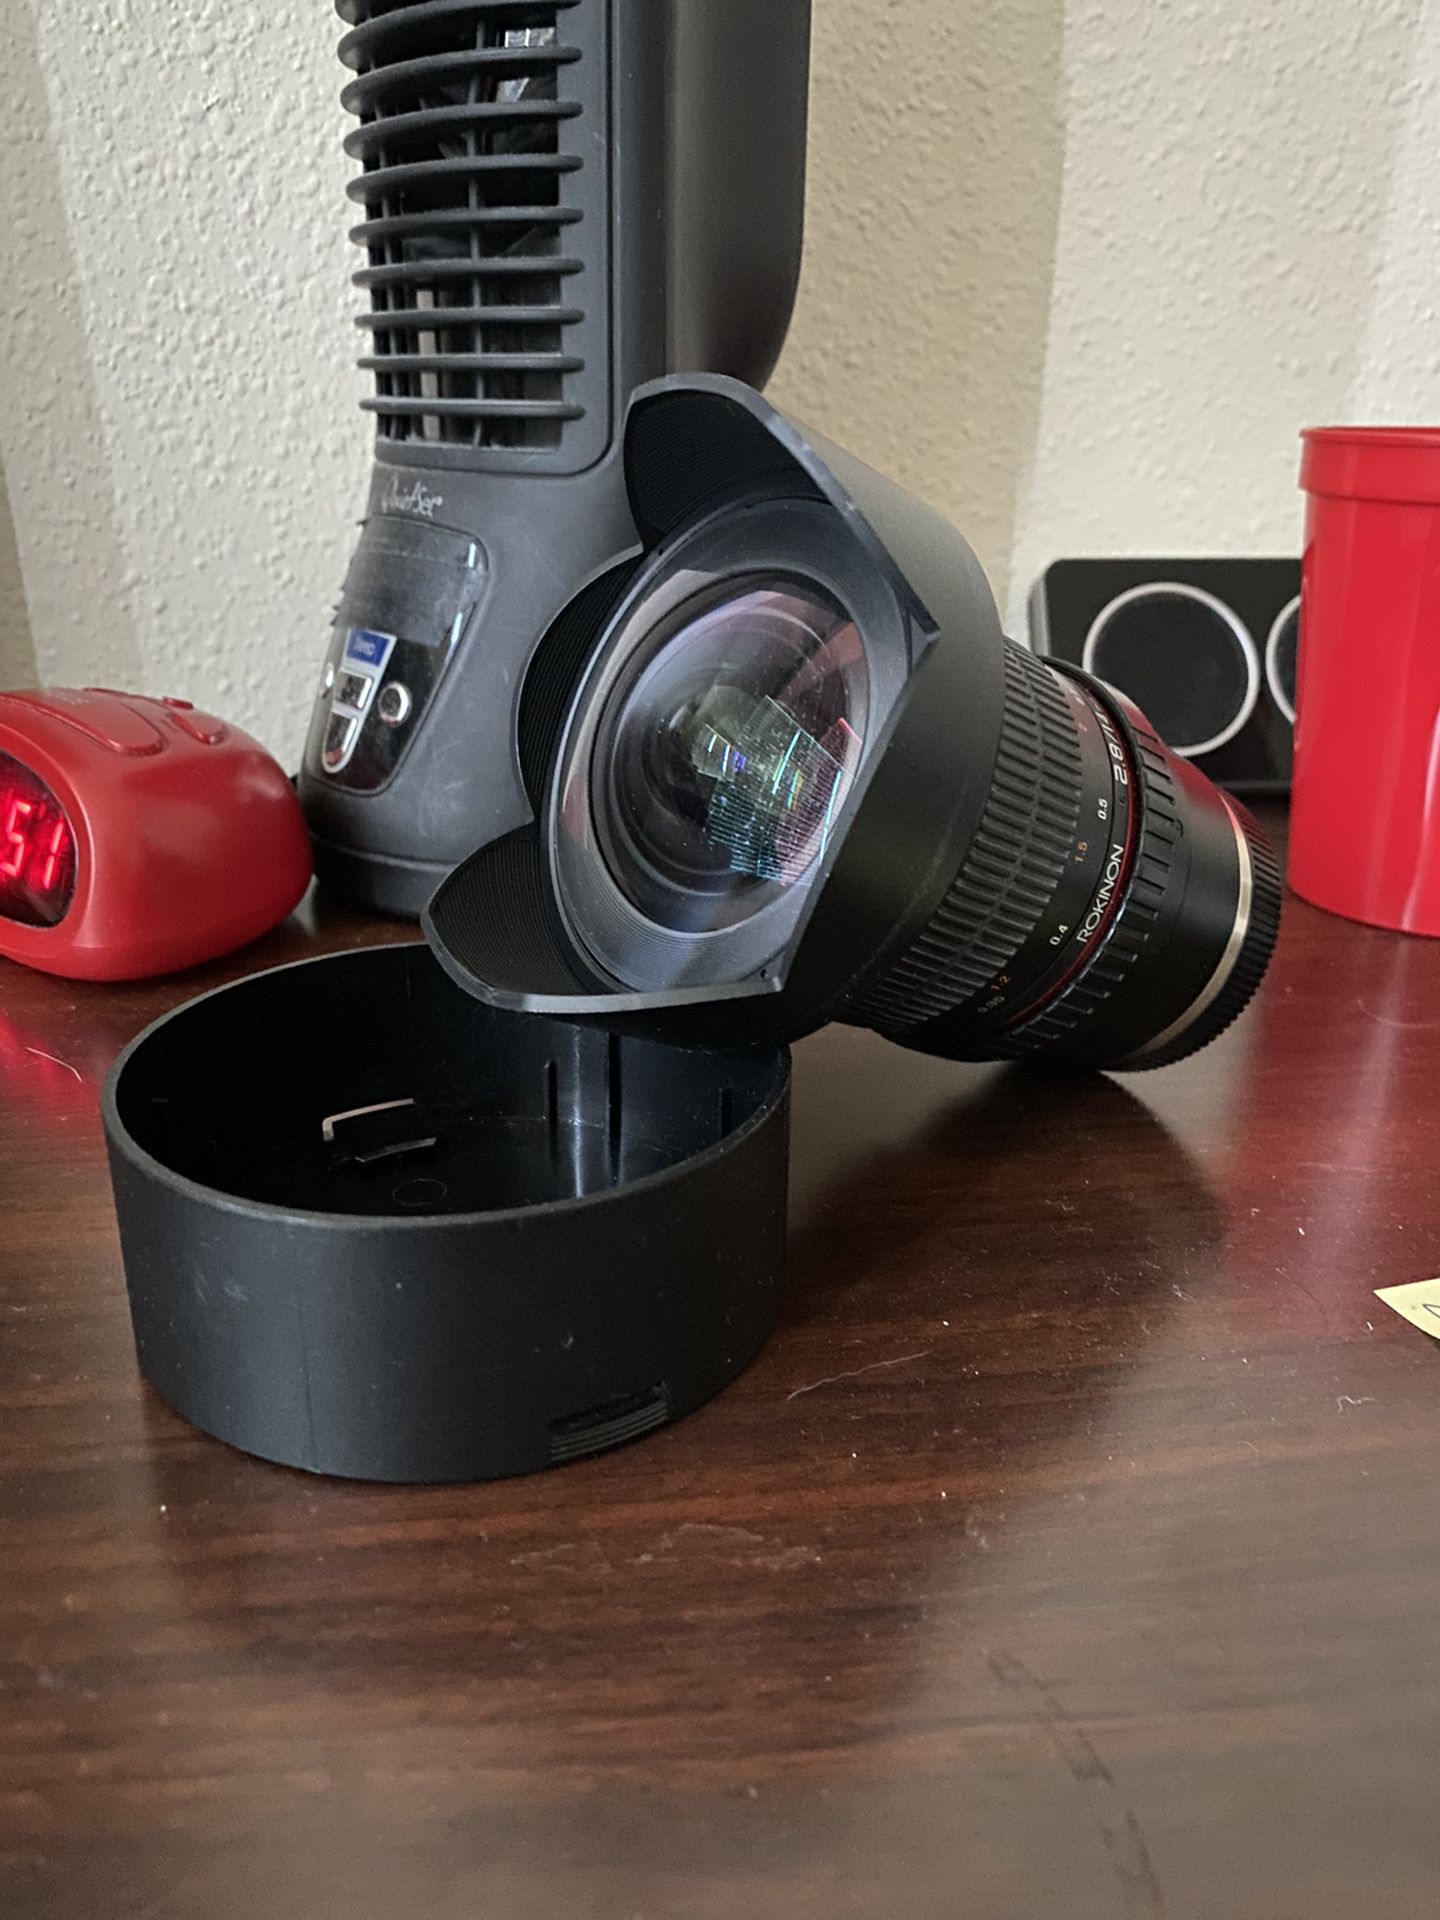 Rokinon 14mm E mount lens 2.8f